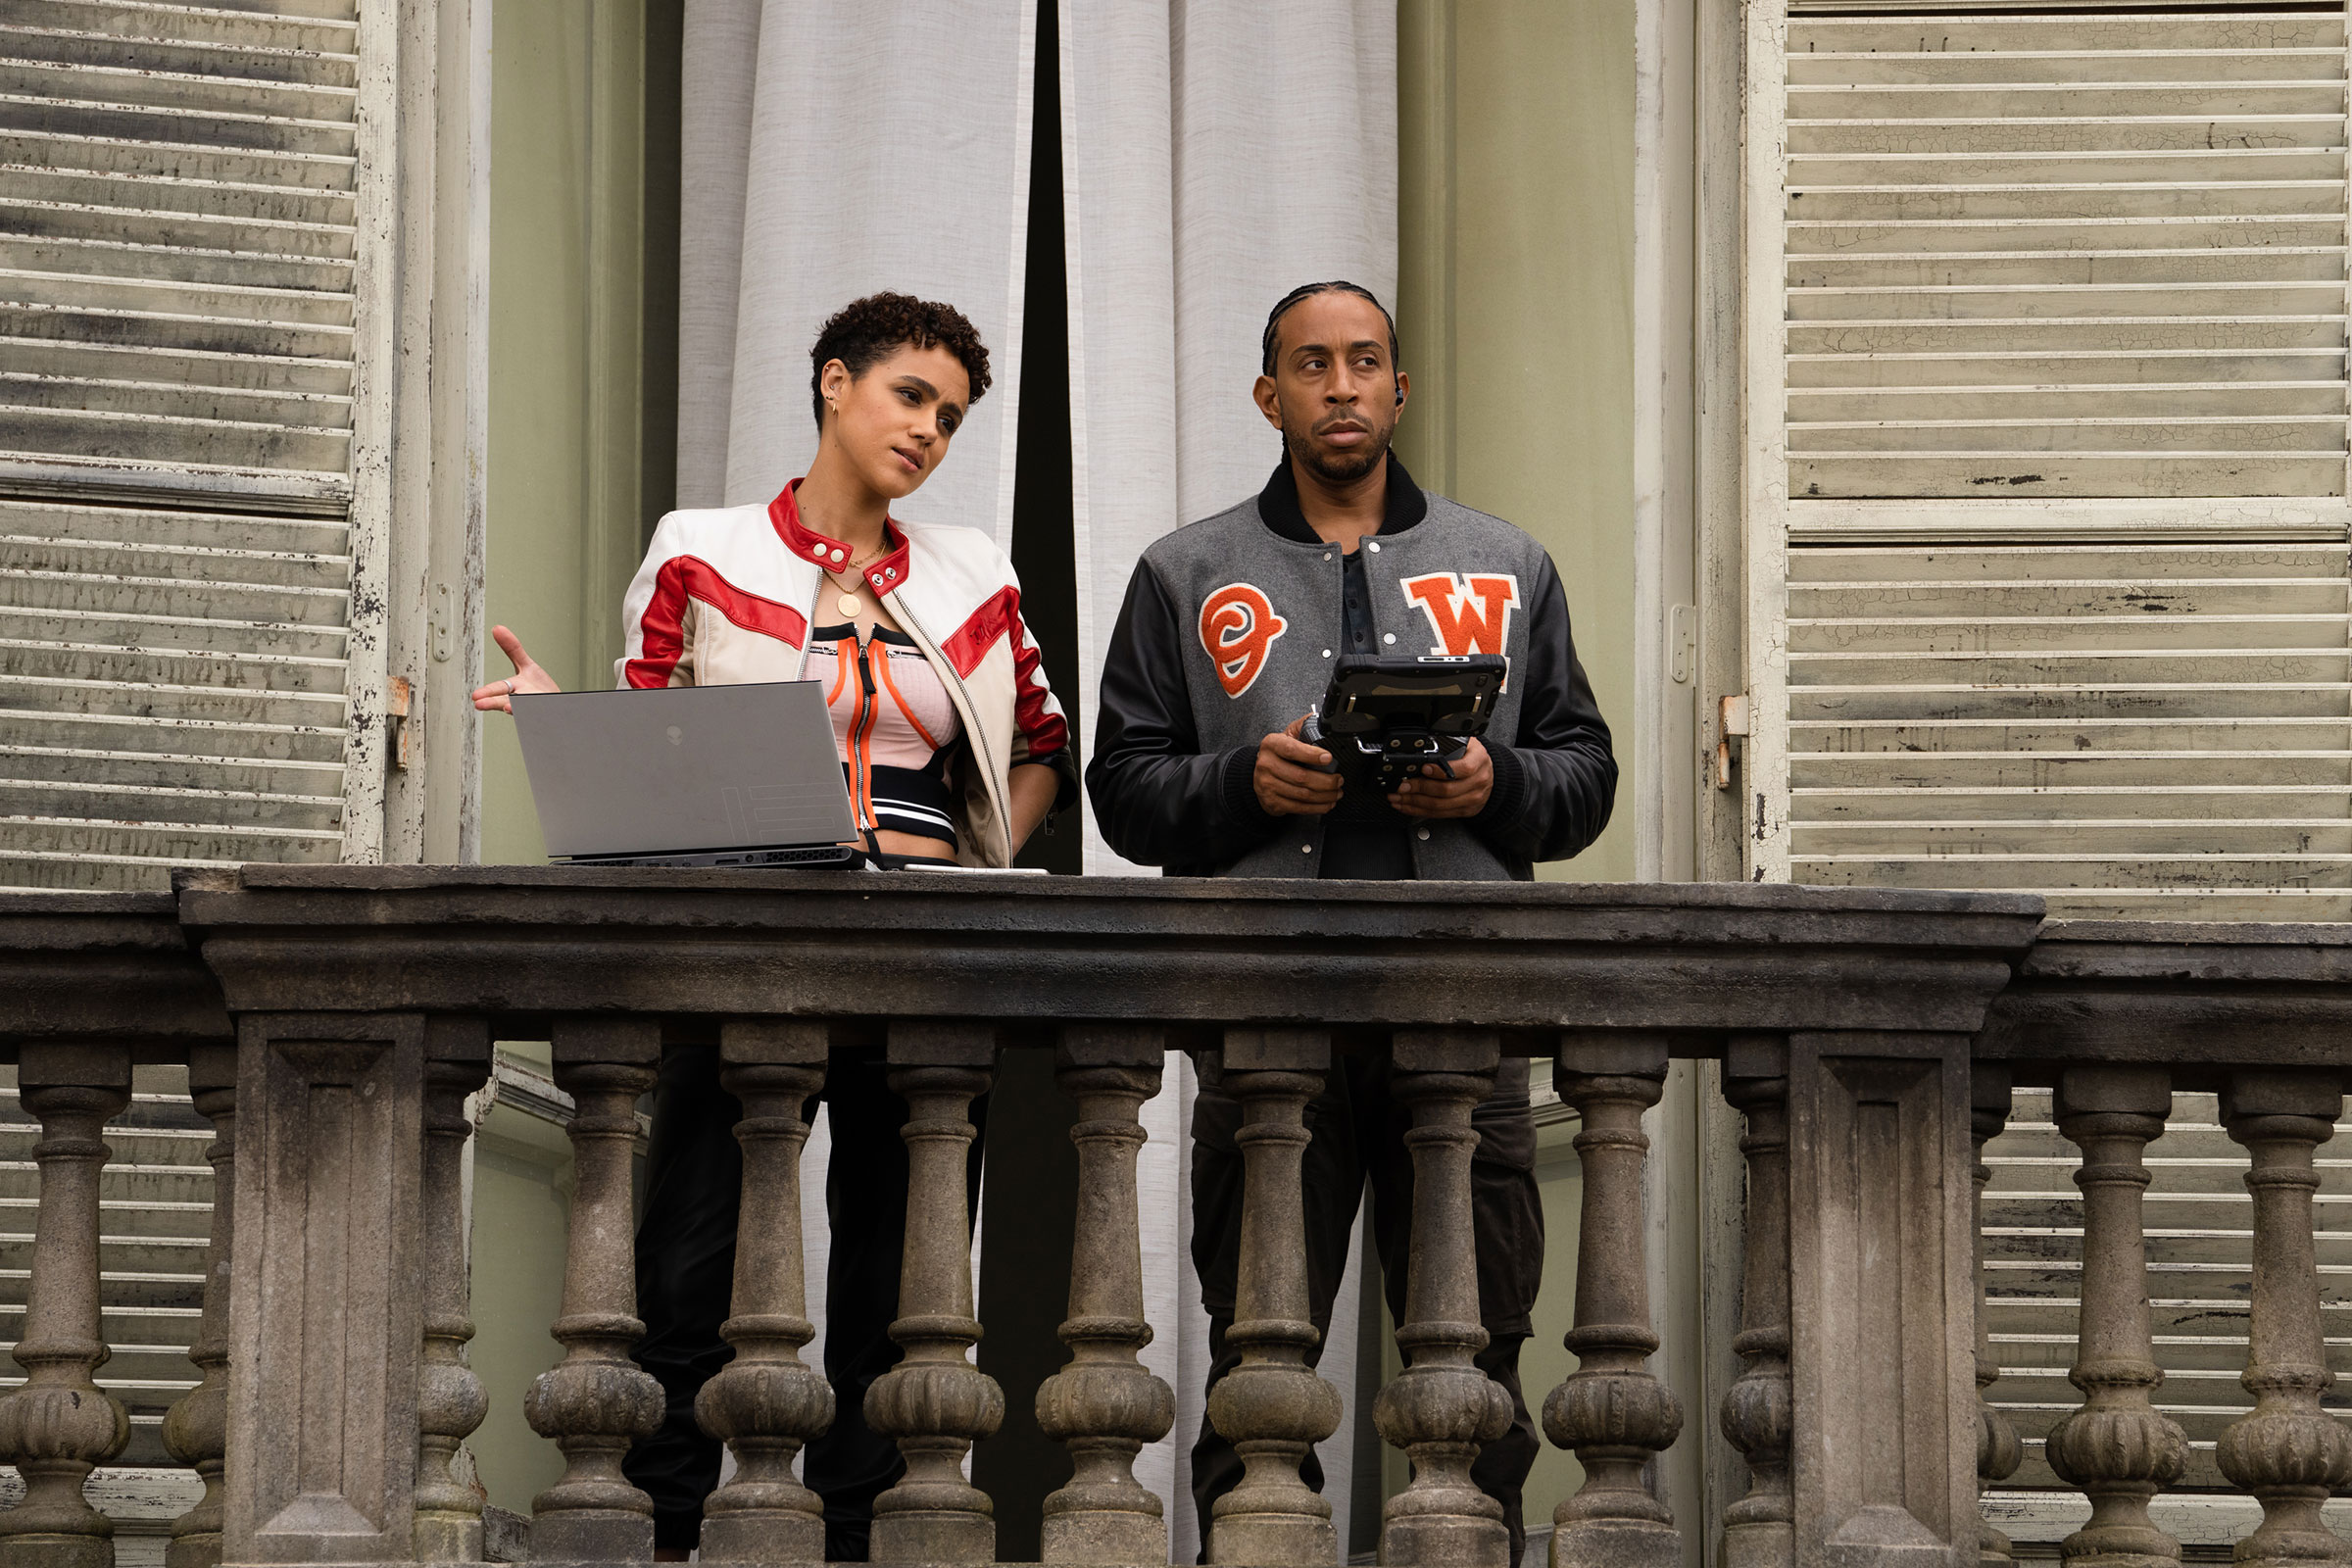 Nathalie Emmanuel as Ramsey and Ludacris as Tej in <em></p>
<p>Бързо x</em> </p>
<p>Натали Емануел като Рамзи и Лудакрис като Tej в <em></em></p>
<h3><span id=